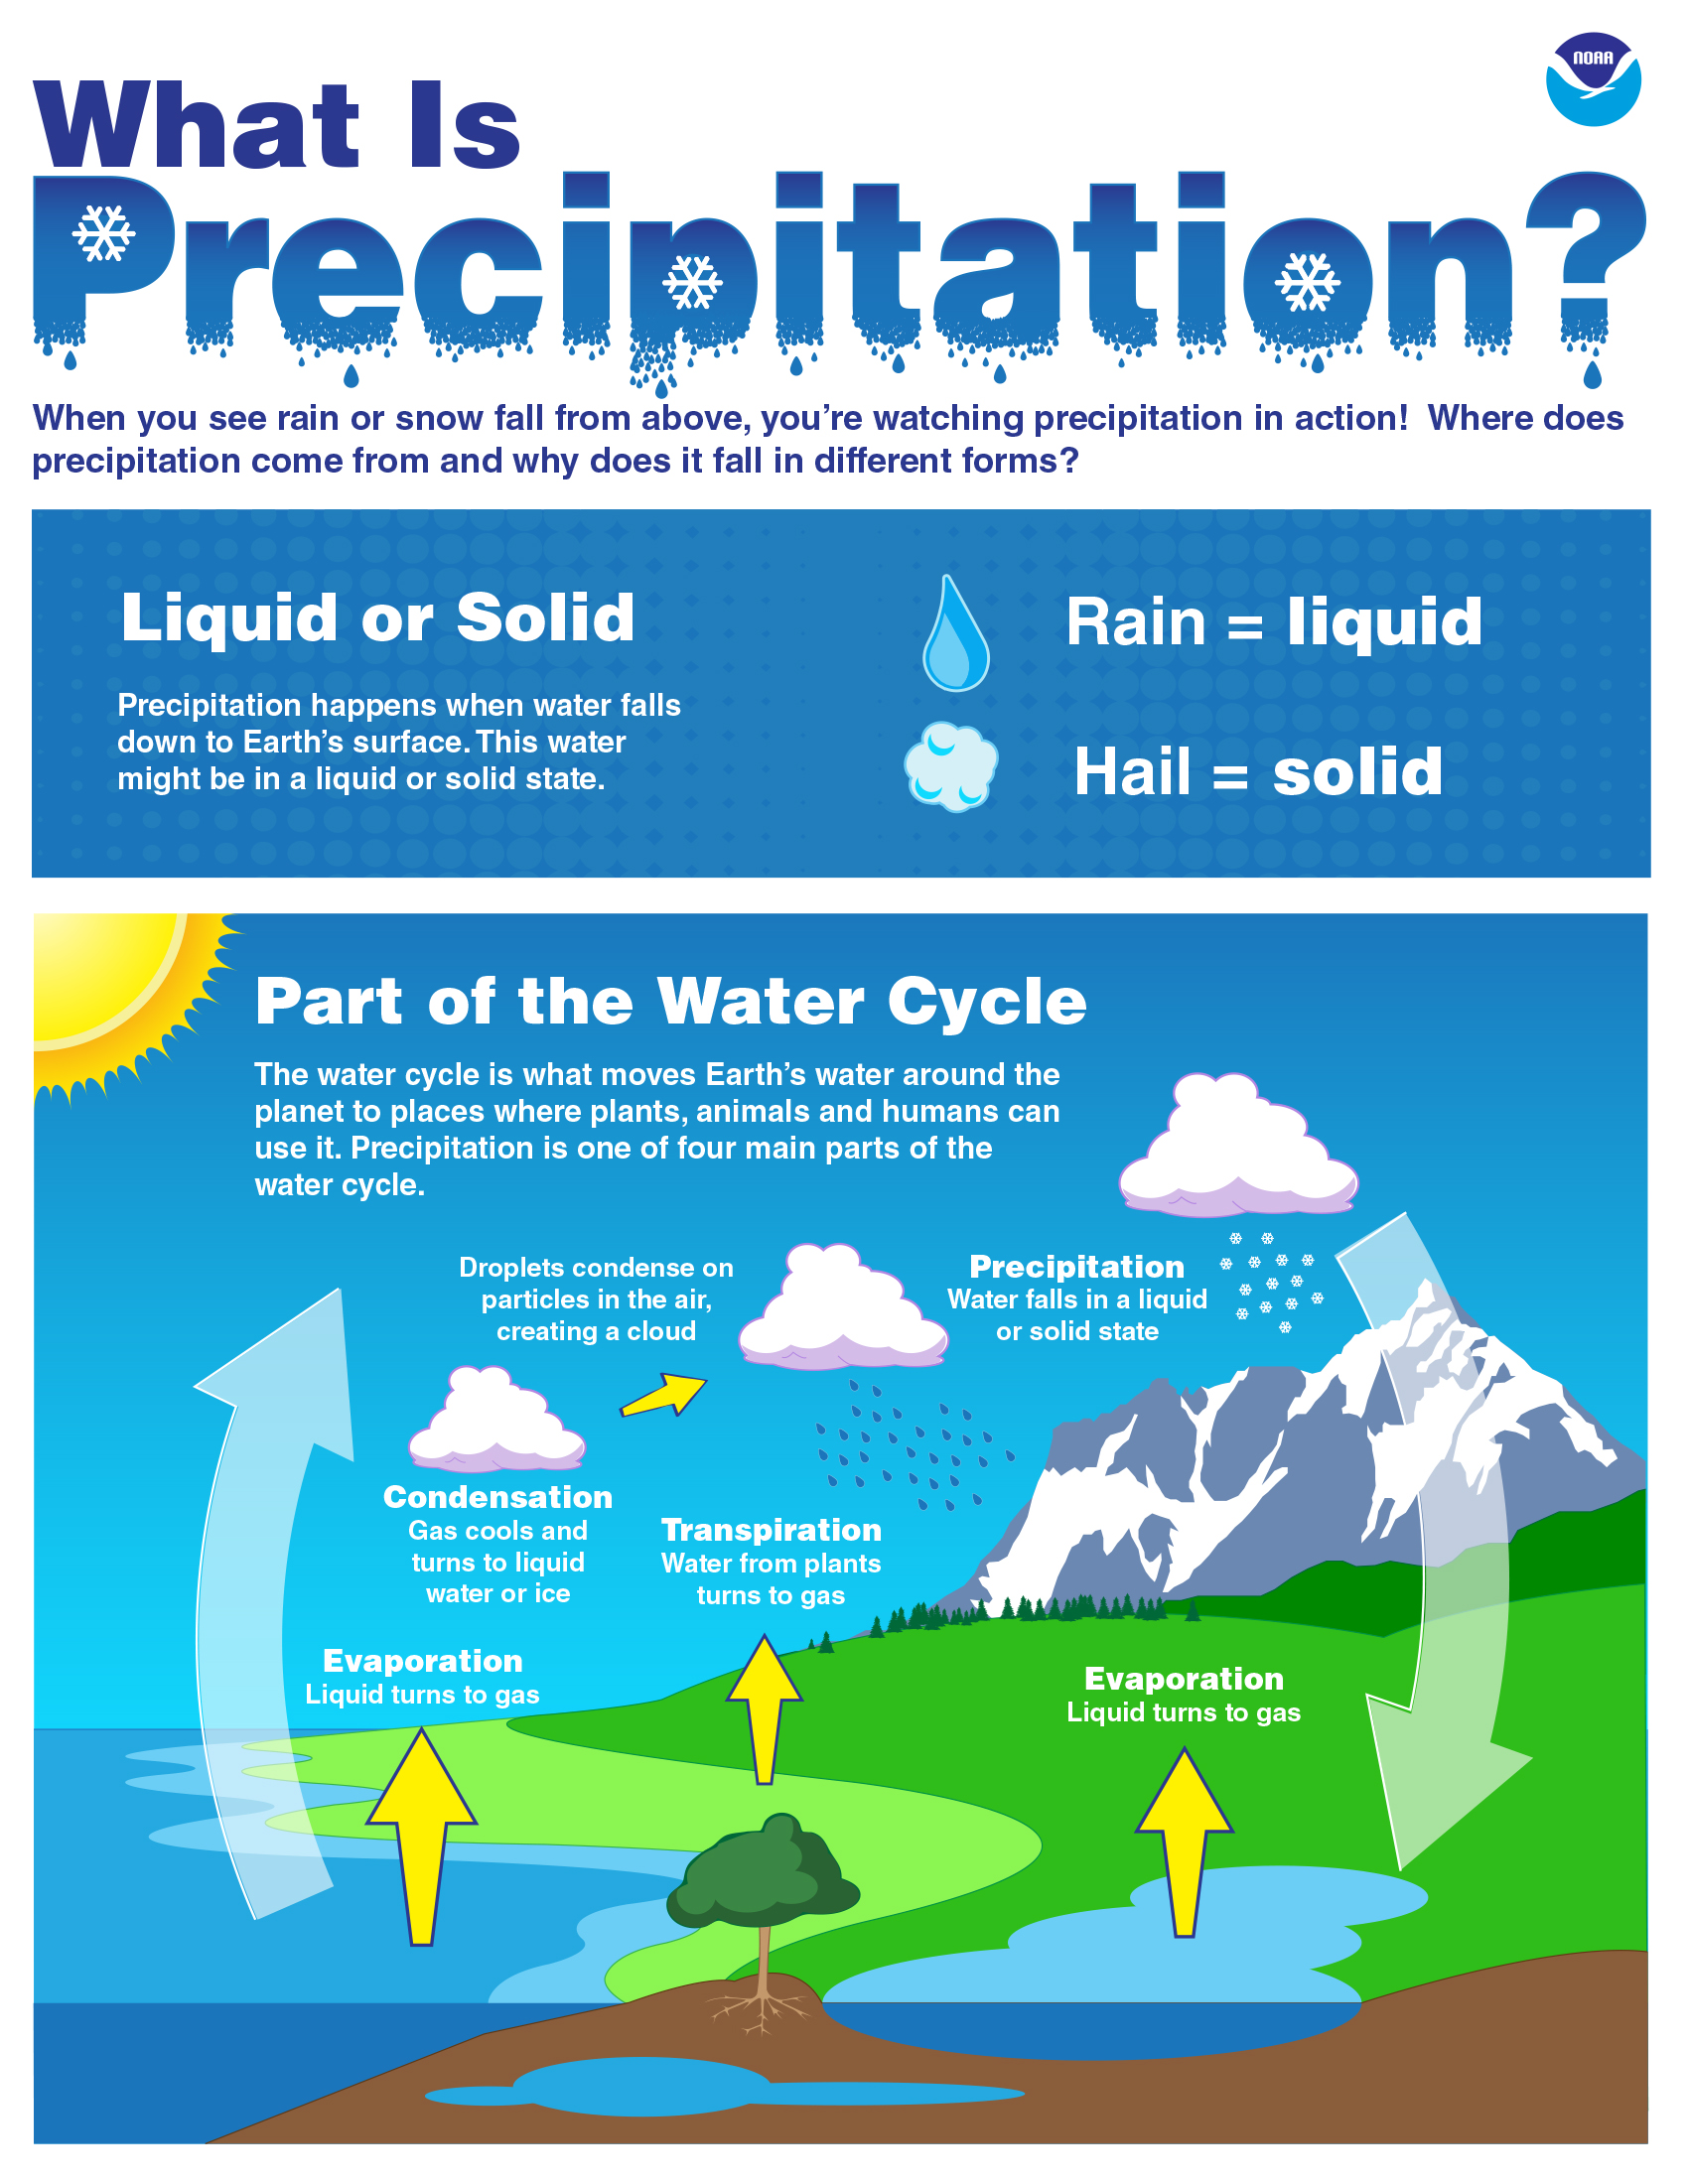 Name a type of precipitation